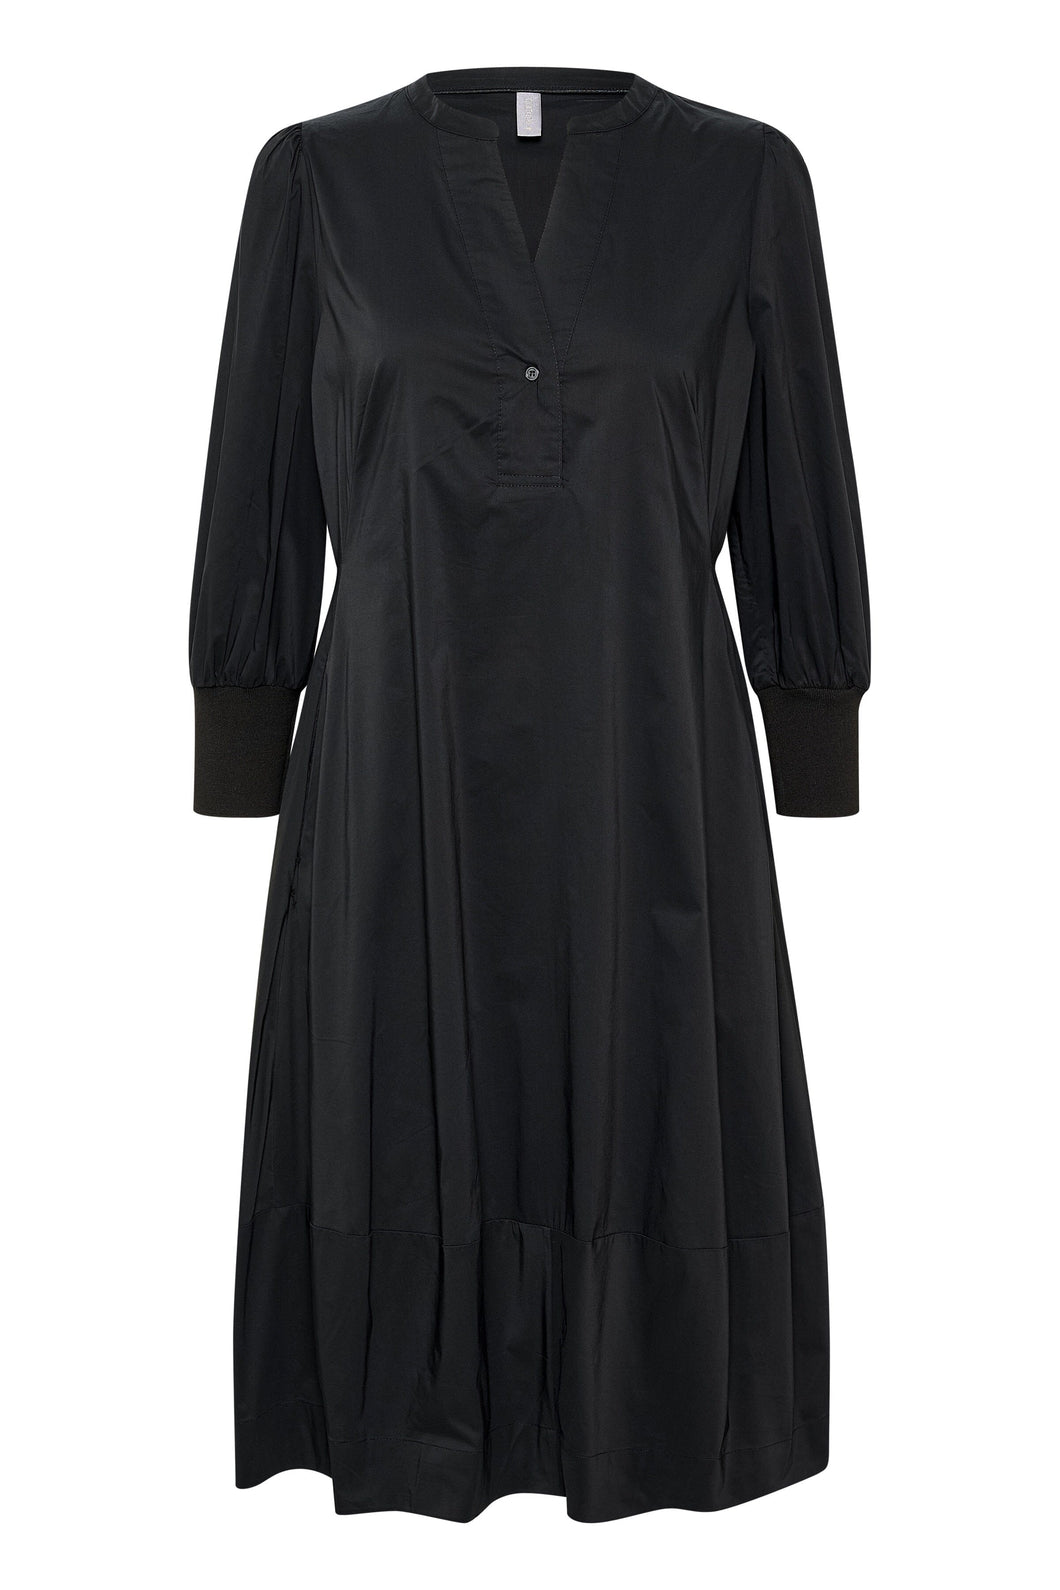 Antoinette 3/4 Sleeve Dress in Black Dress Culture 